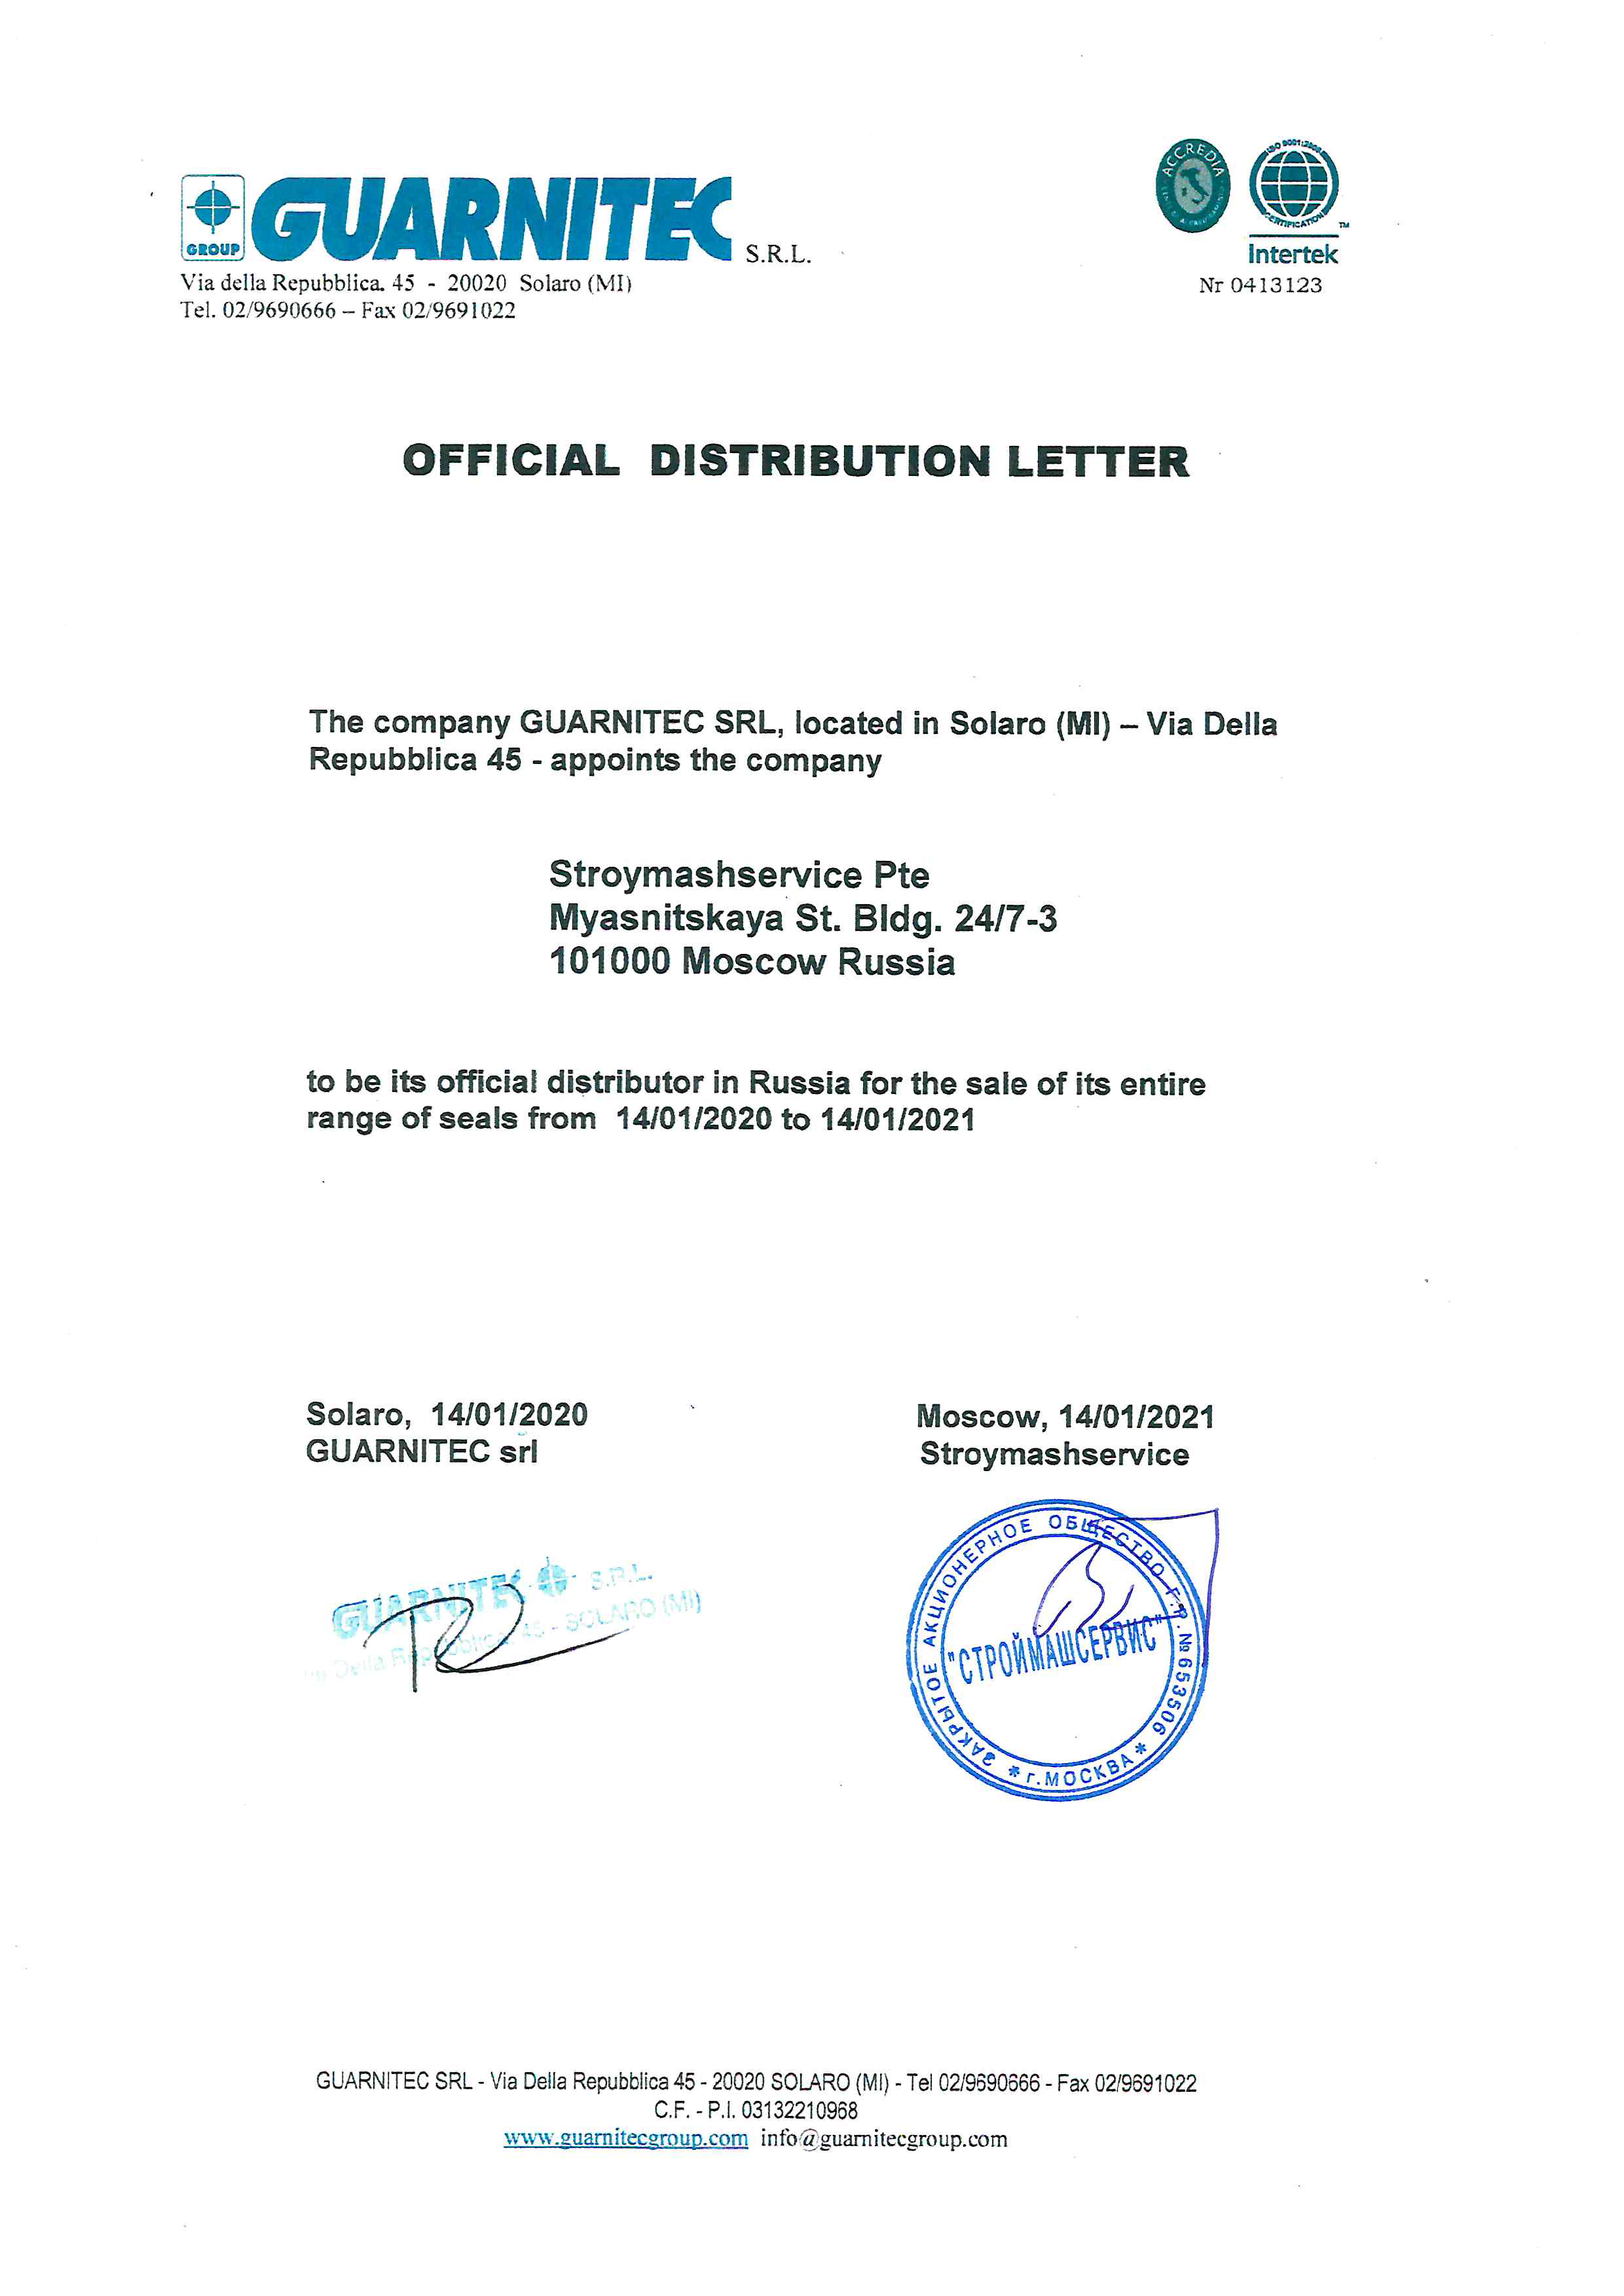 Сертификат дистрибьютора GUARNITEC